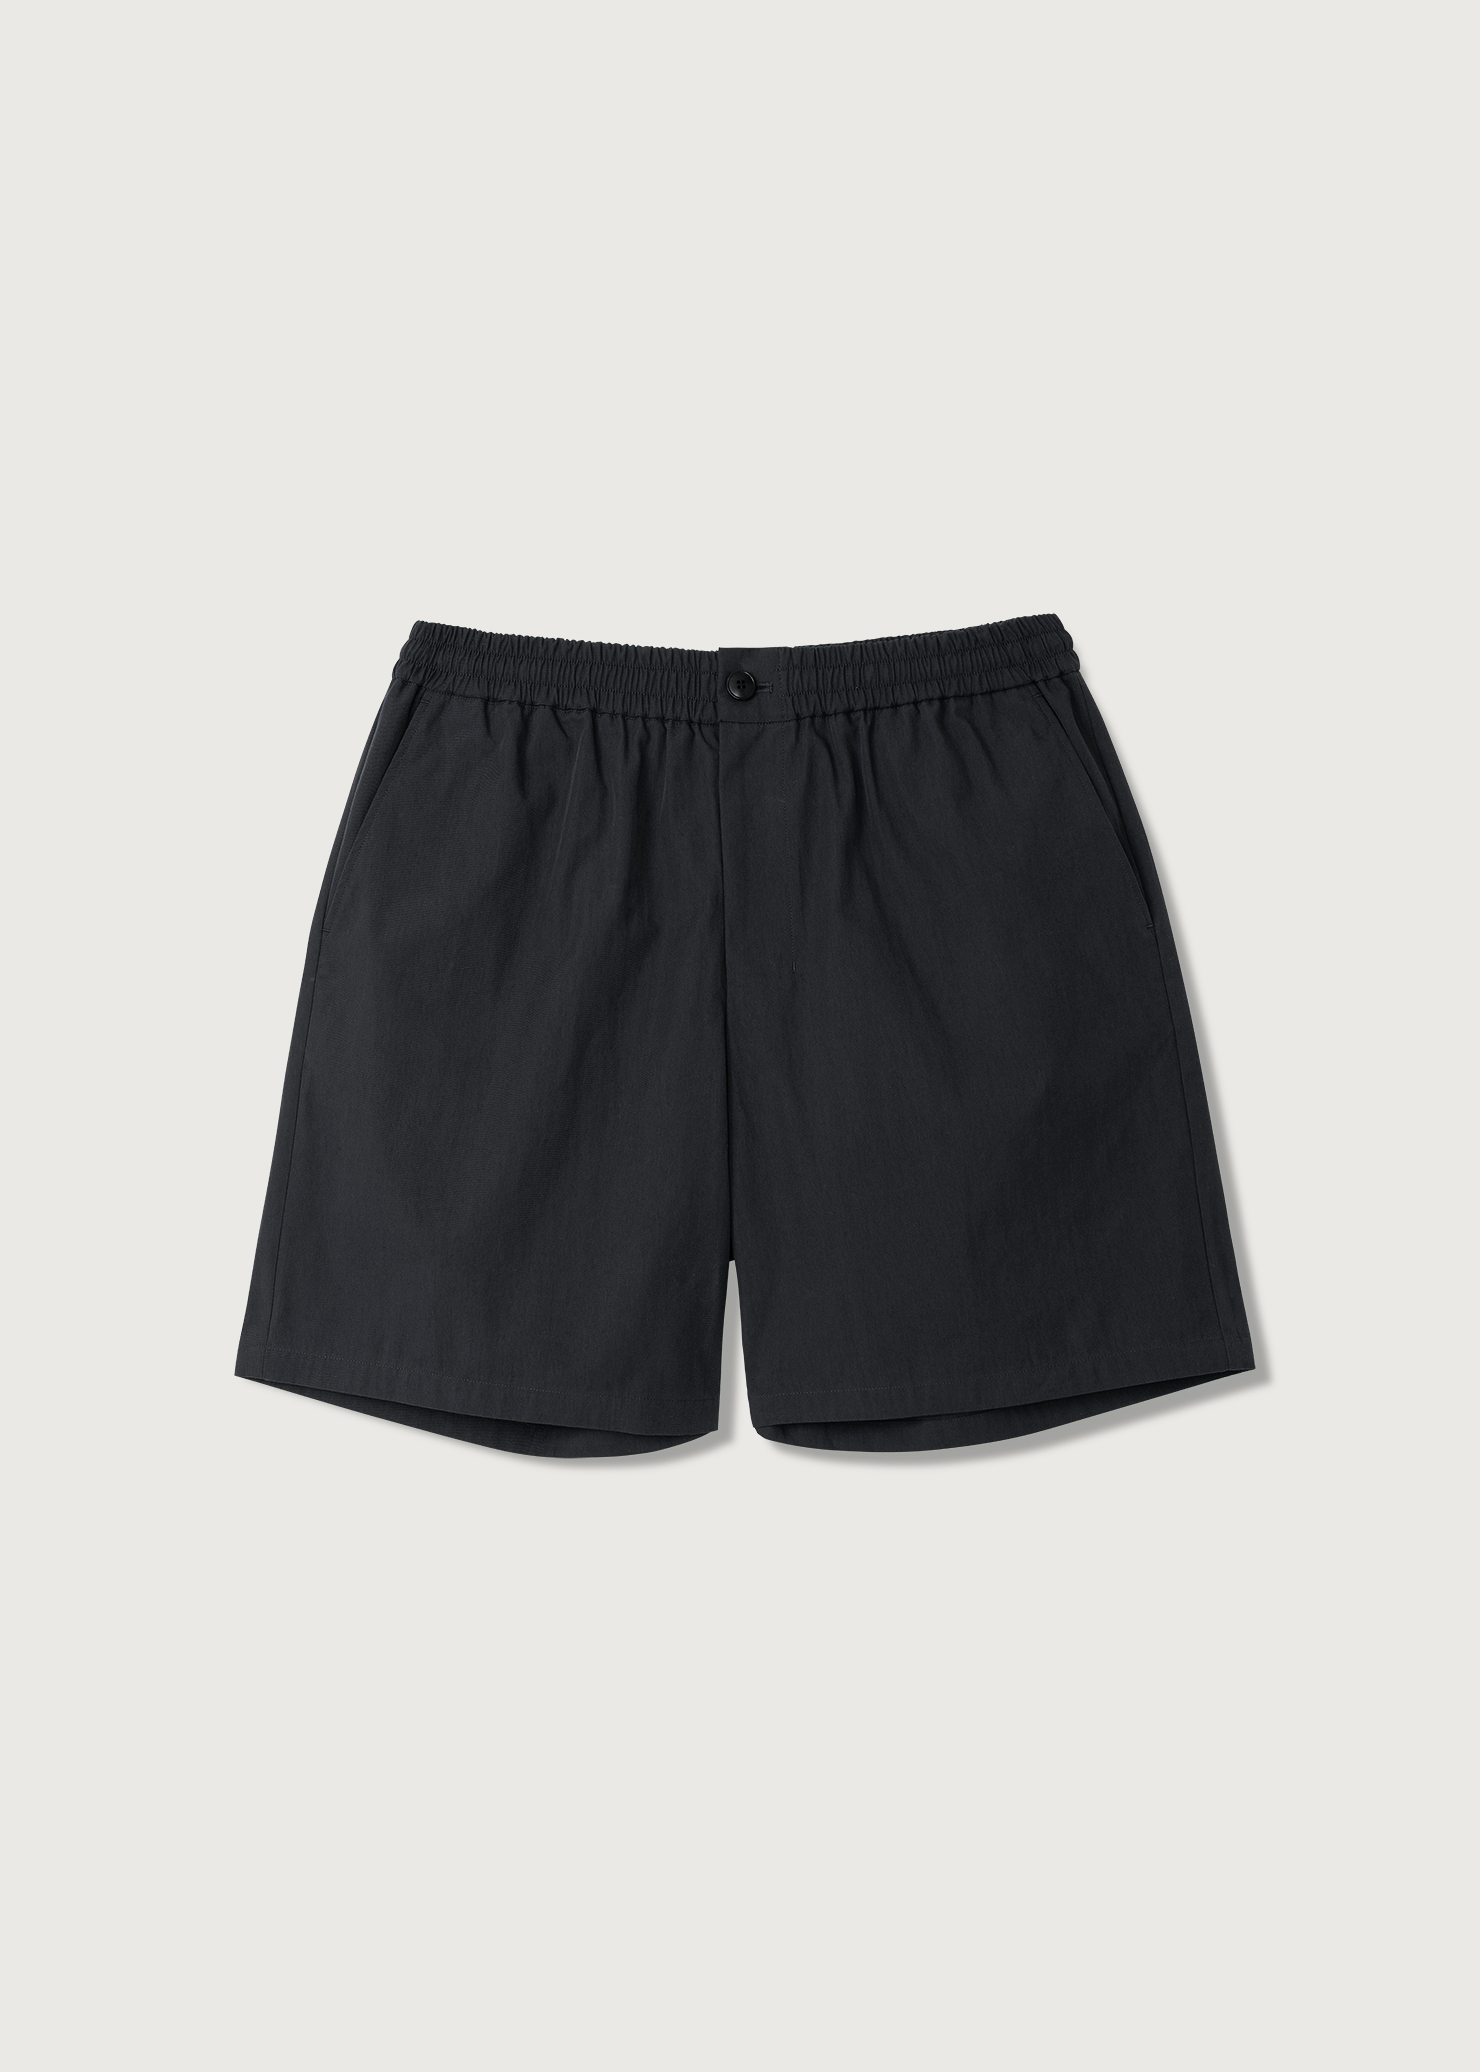 Mens) Easy Formal Shorts_Charcoal